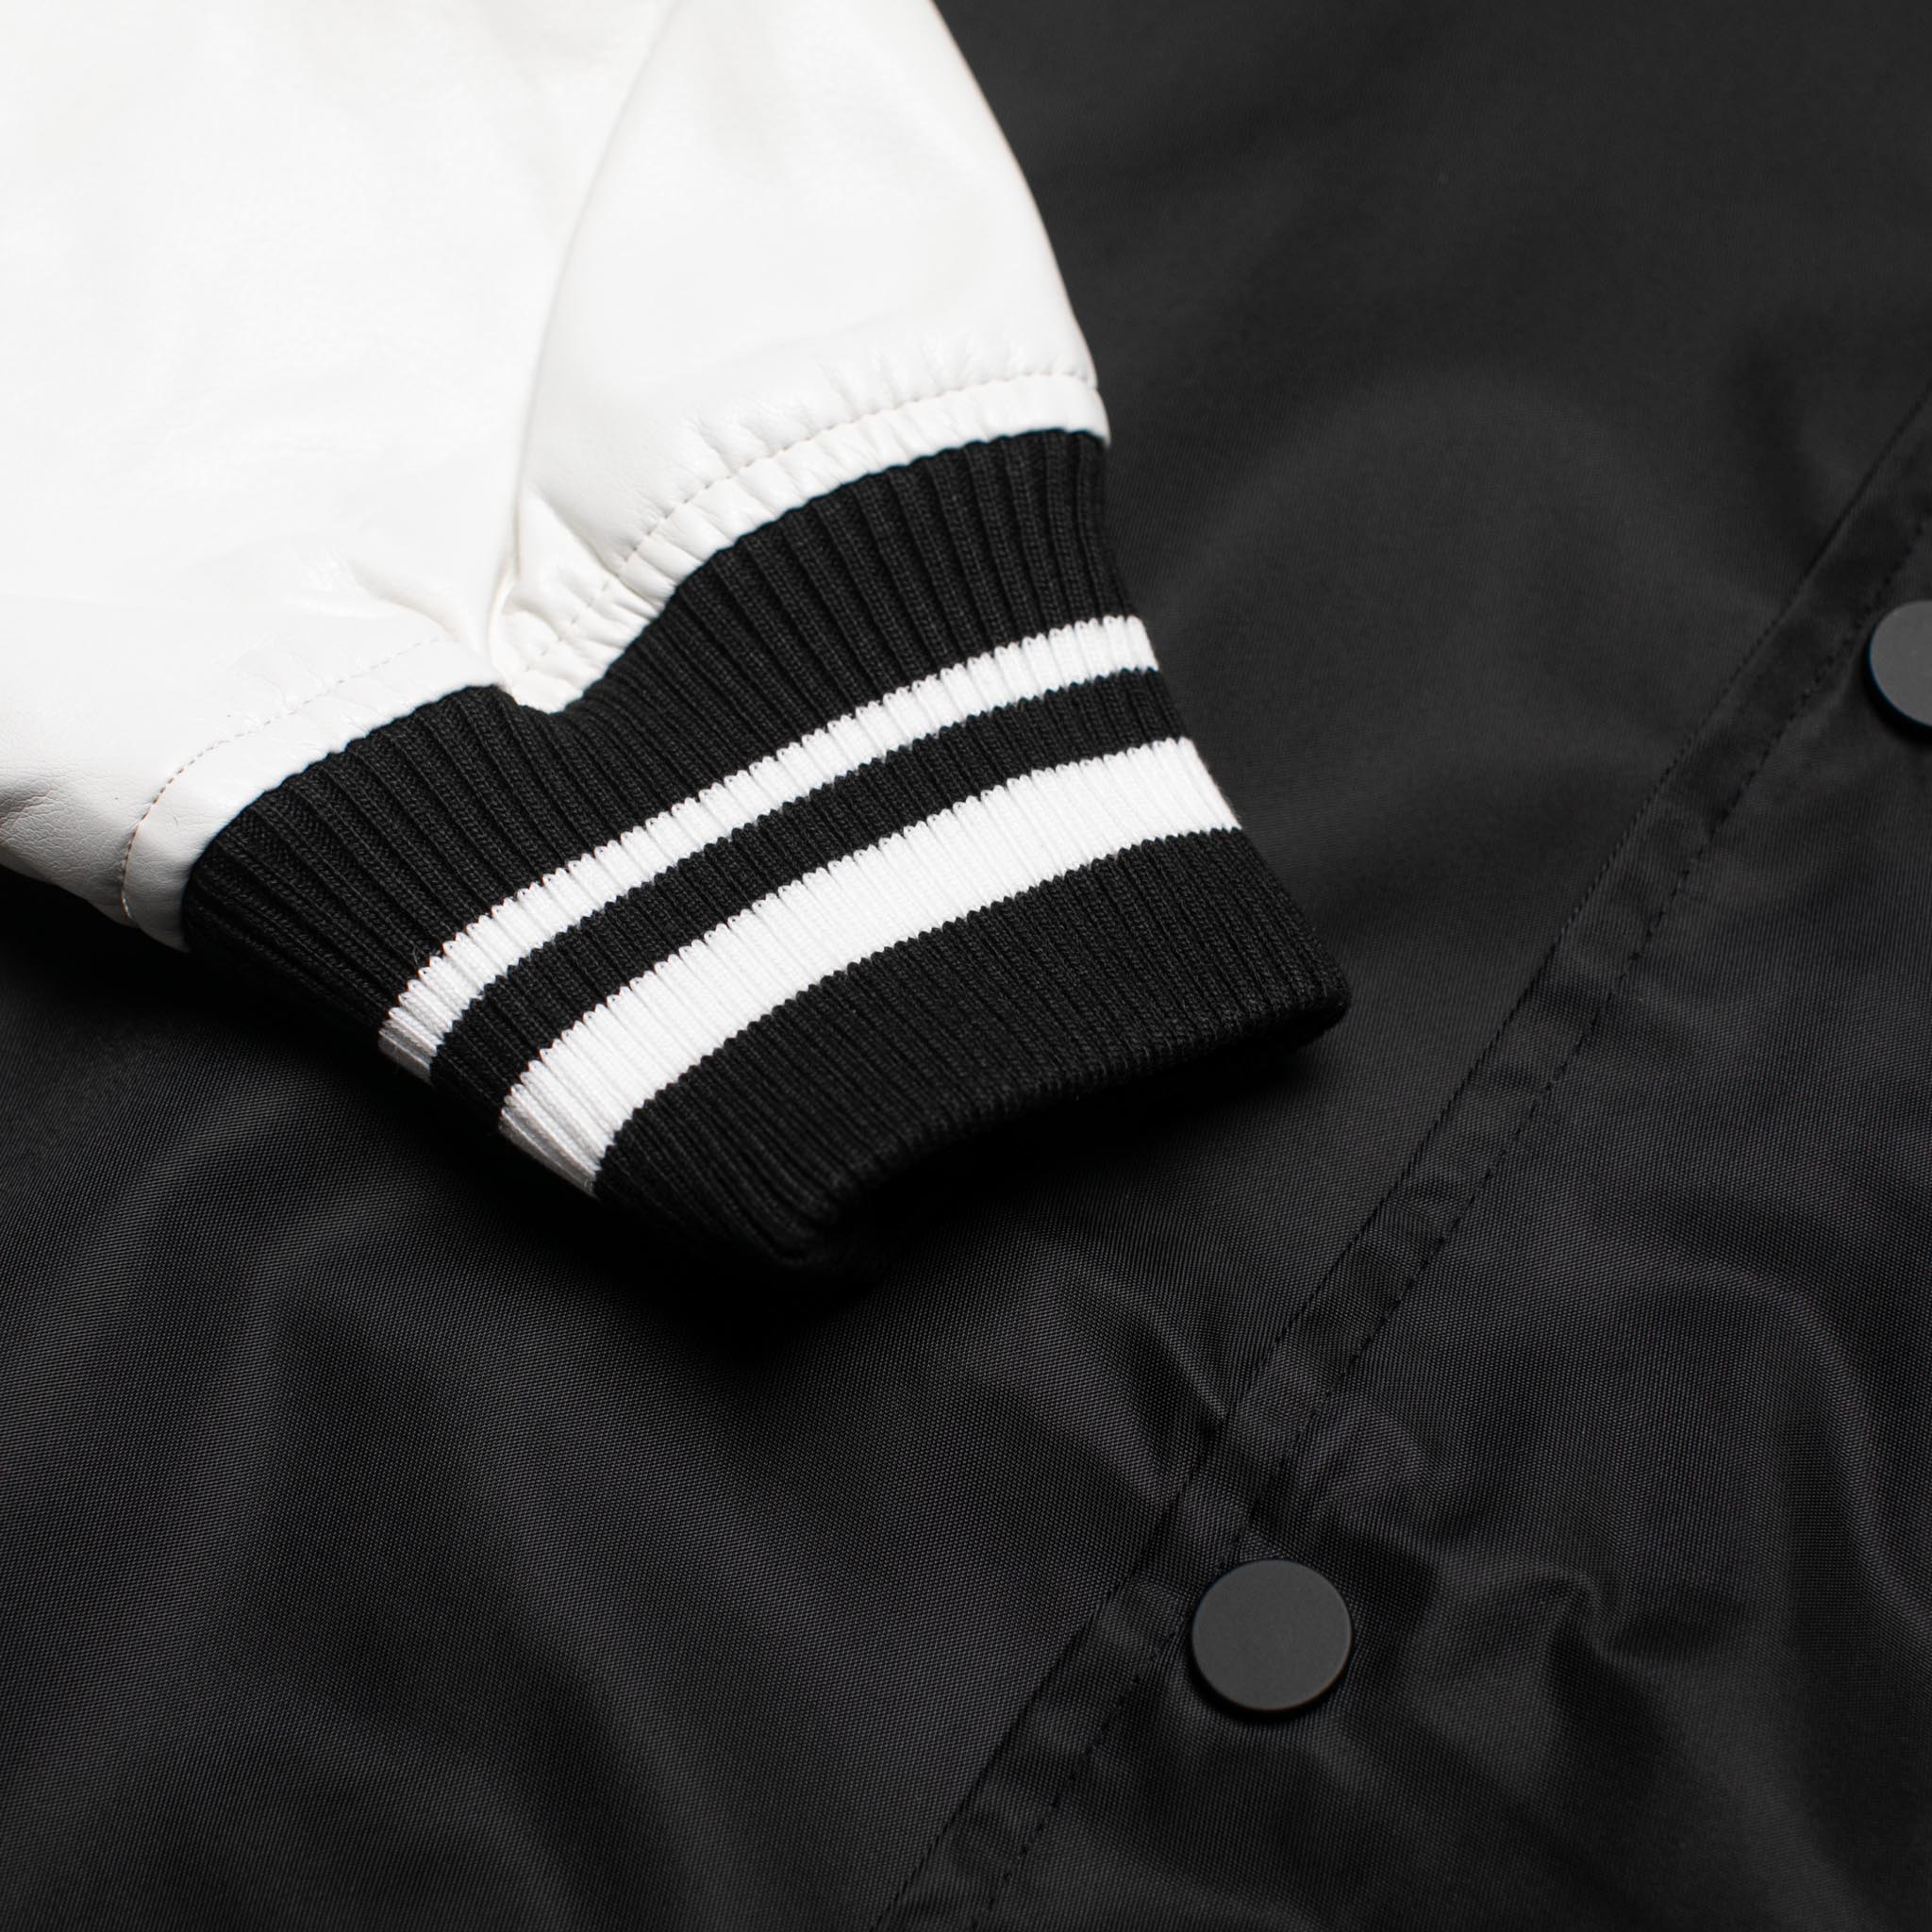 HOMME+ Varsity Jacket Black/White